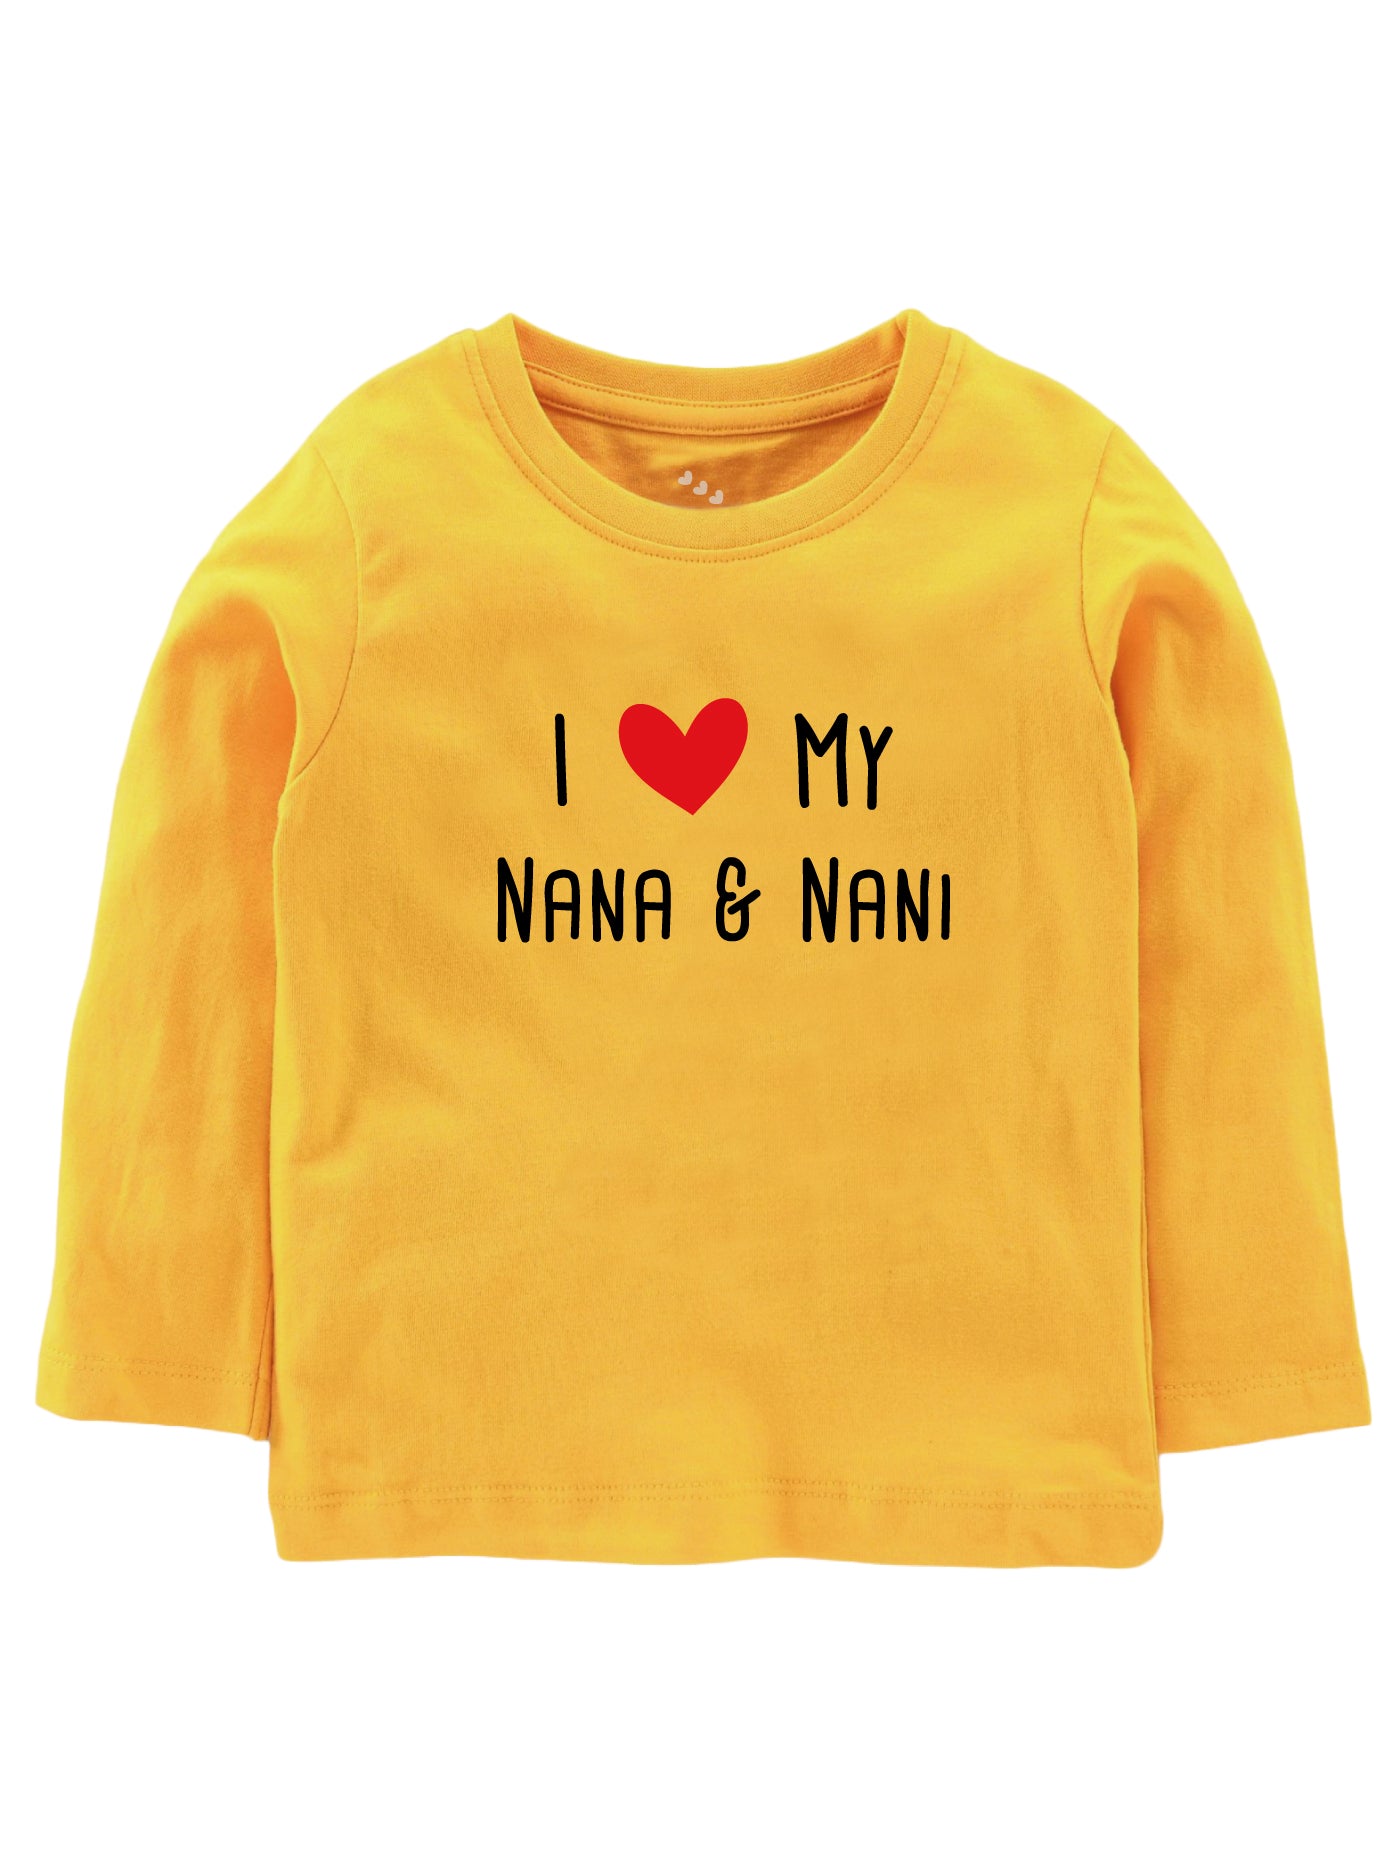 I Love My Nana & Nani - Tee